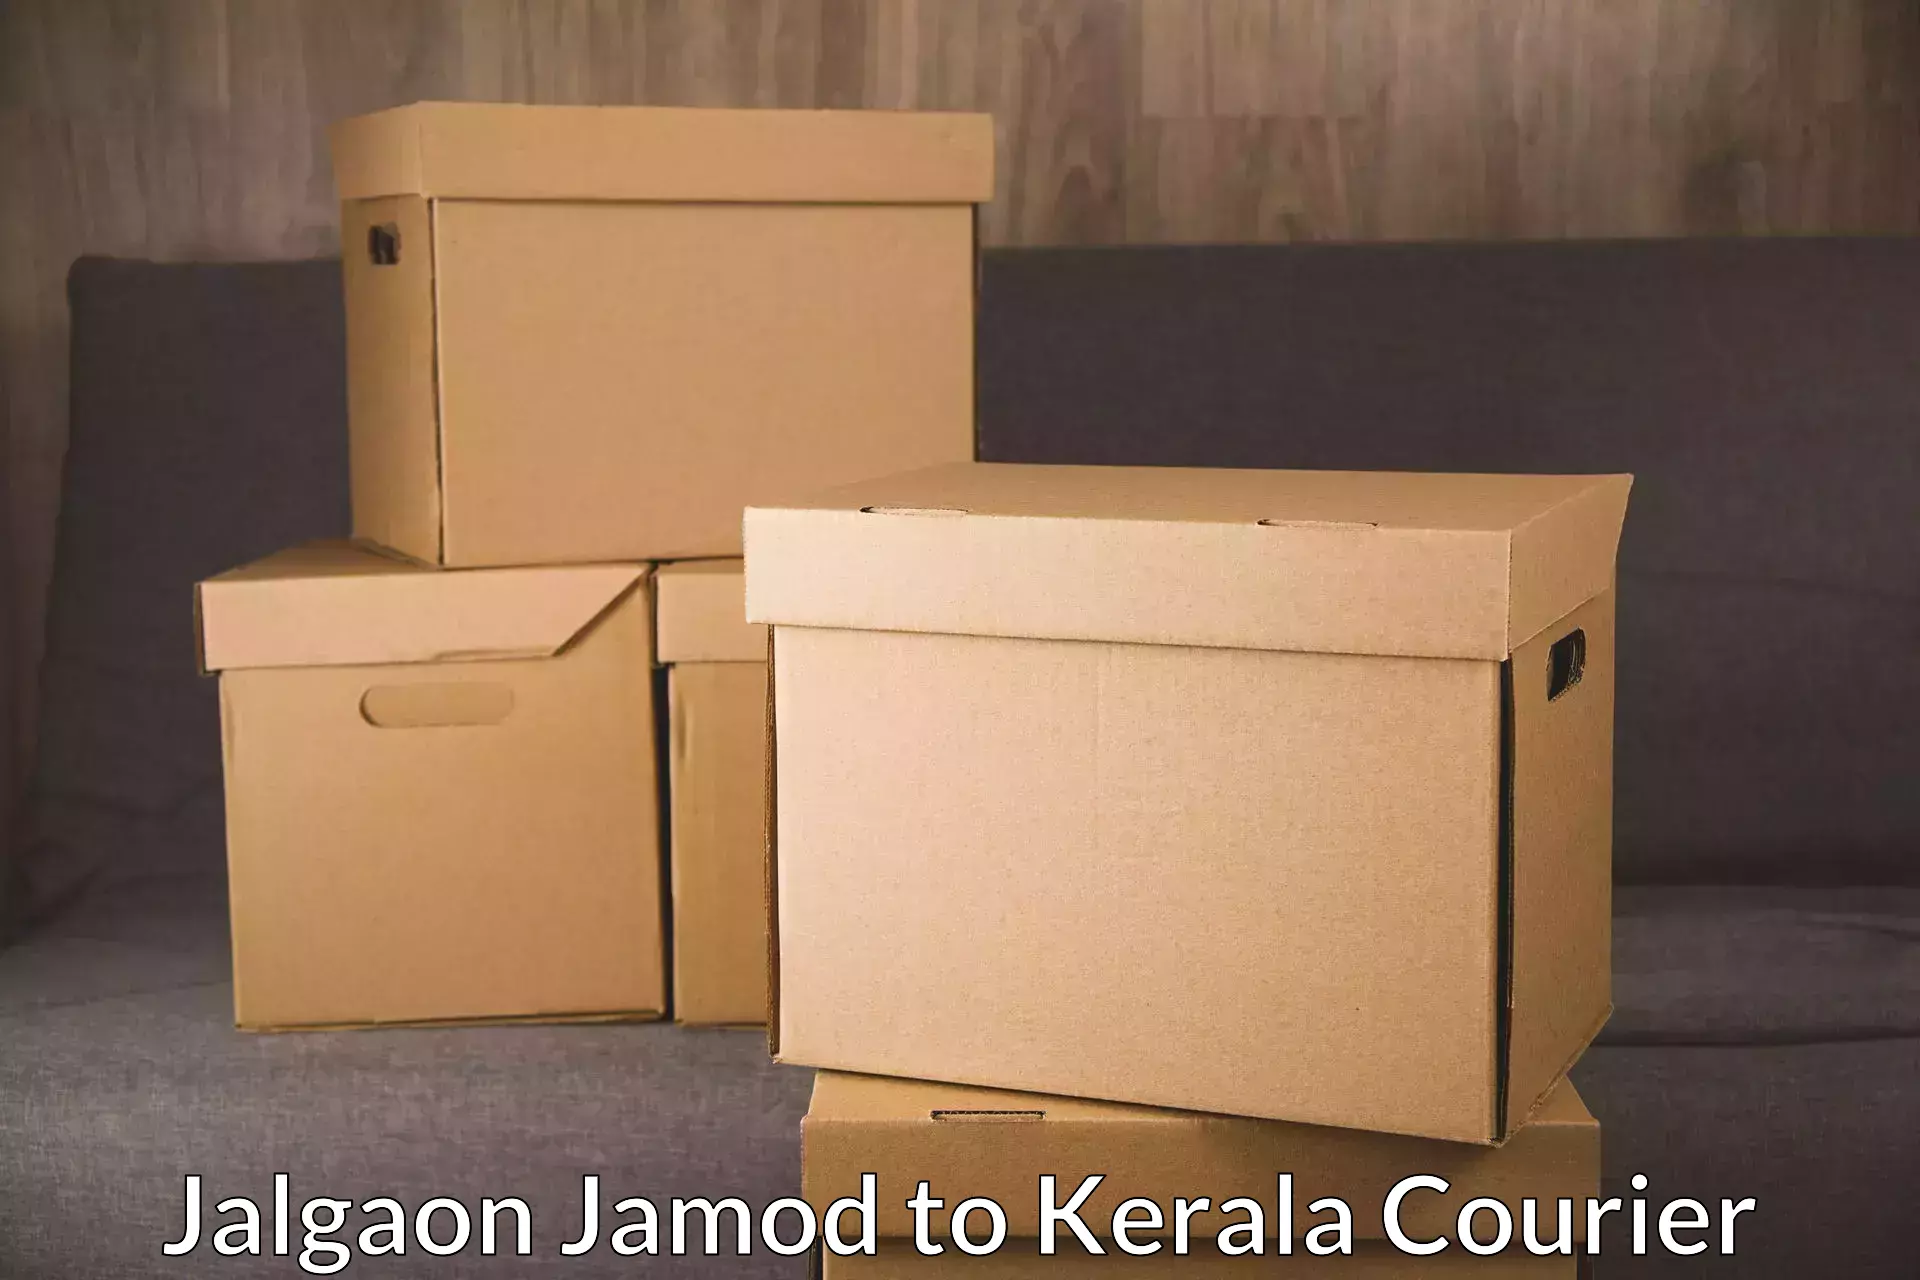 Express logistics service Jalgaon Jamod to Ponnani